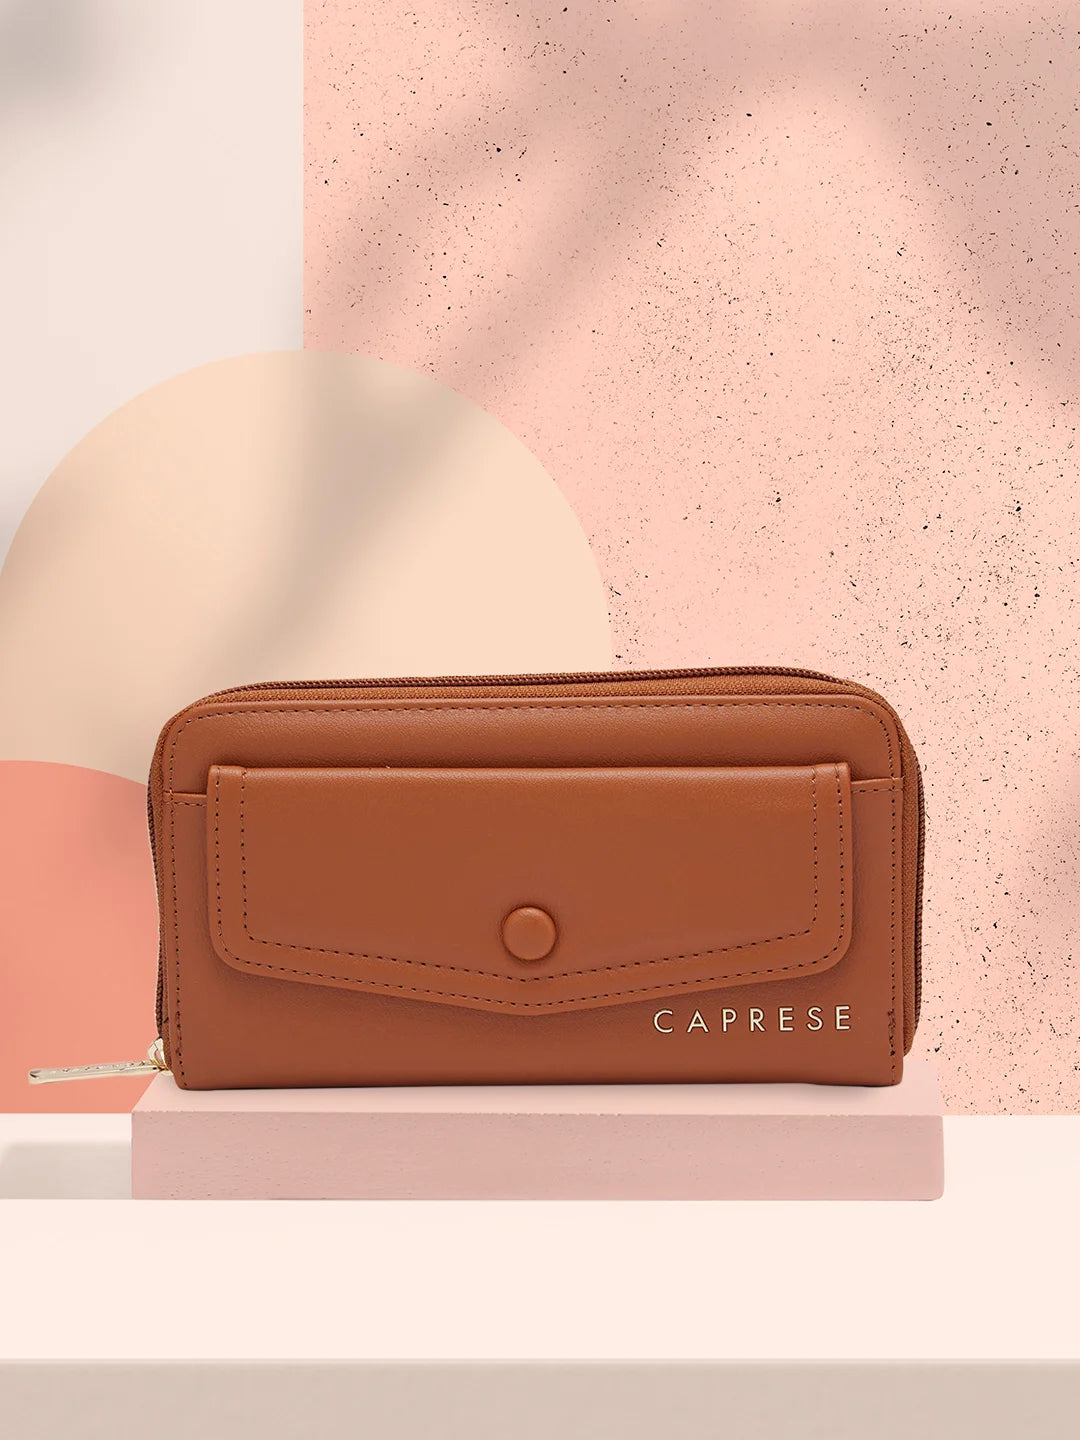 Buy Caprese Wallets & Card Holders online - Women - 203 products